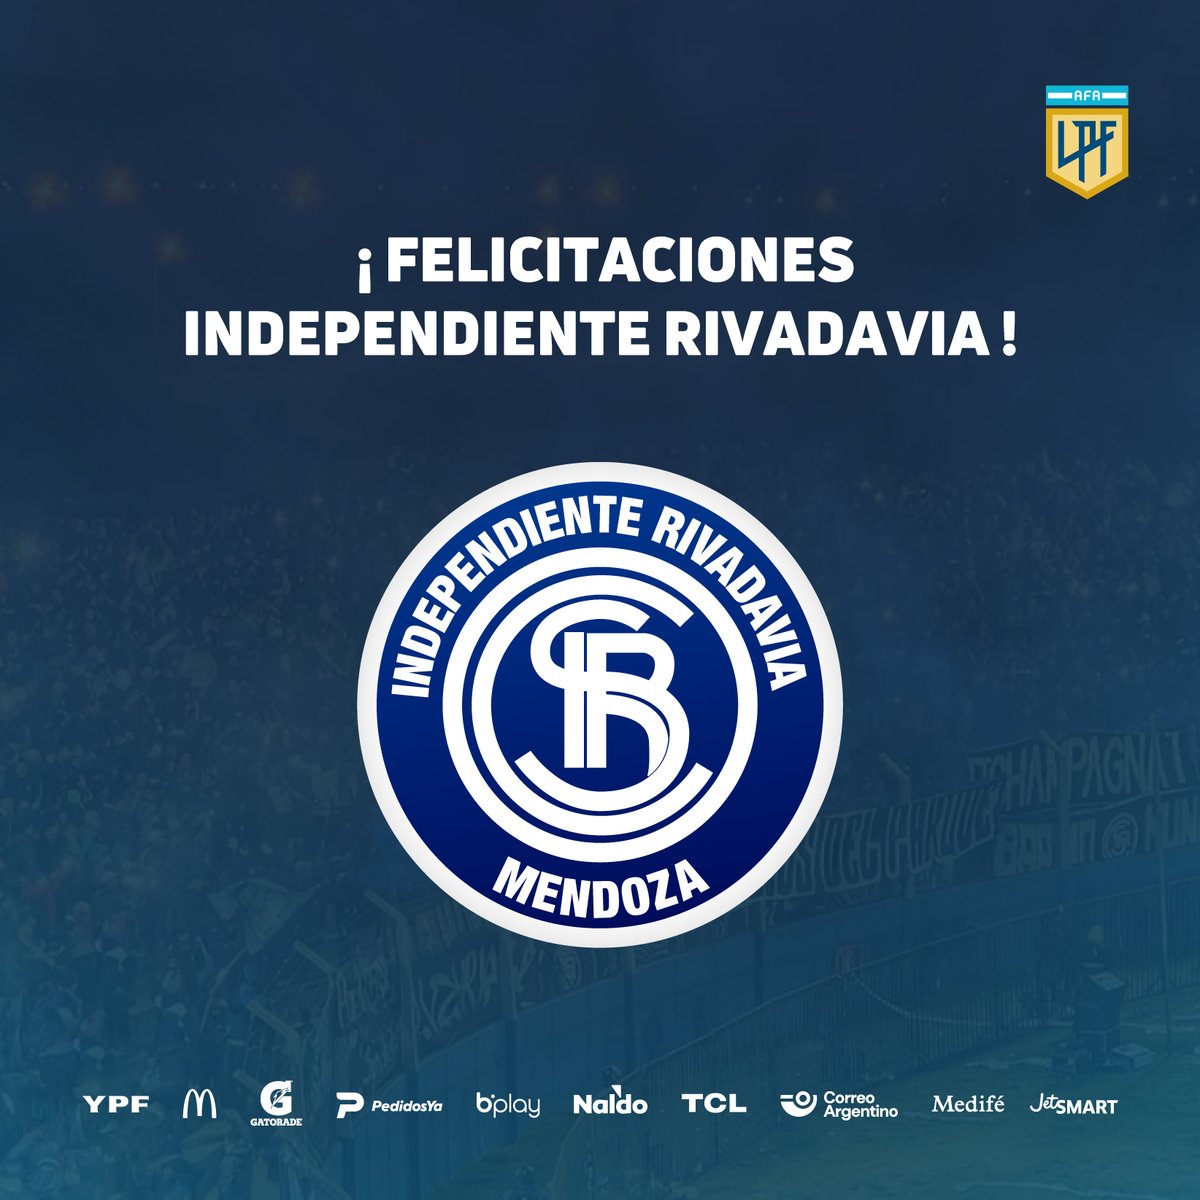 Independiente Rivadavia Mendoza F.C